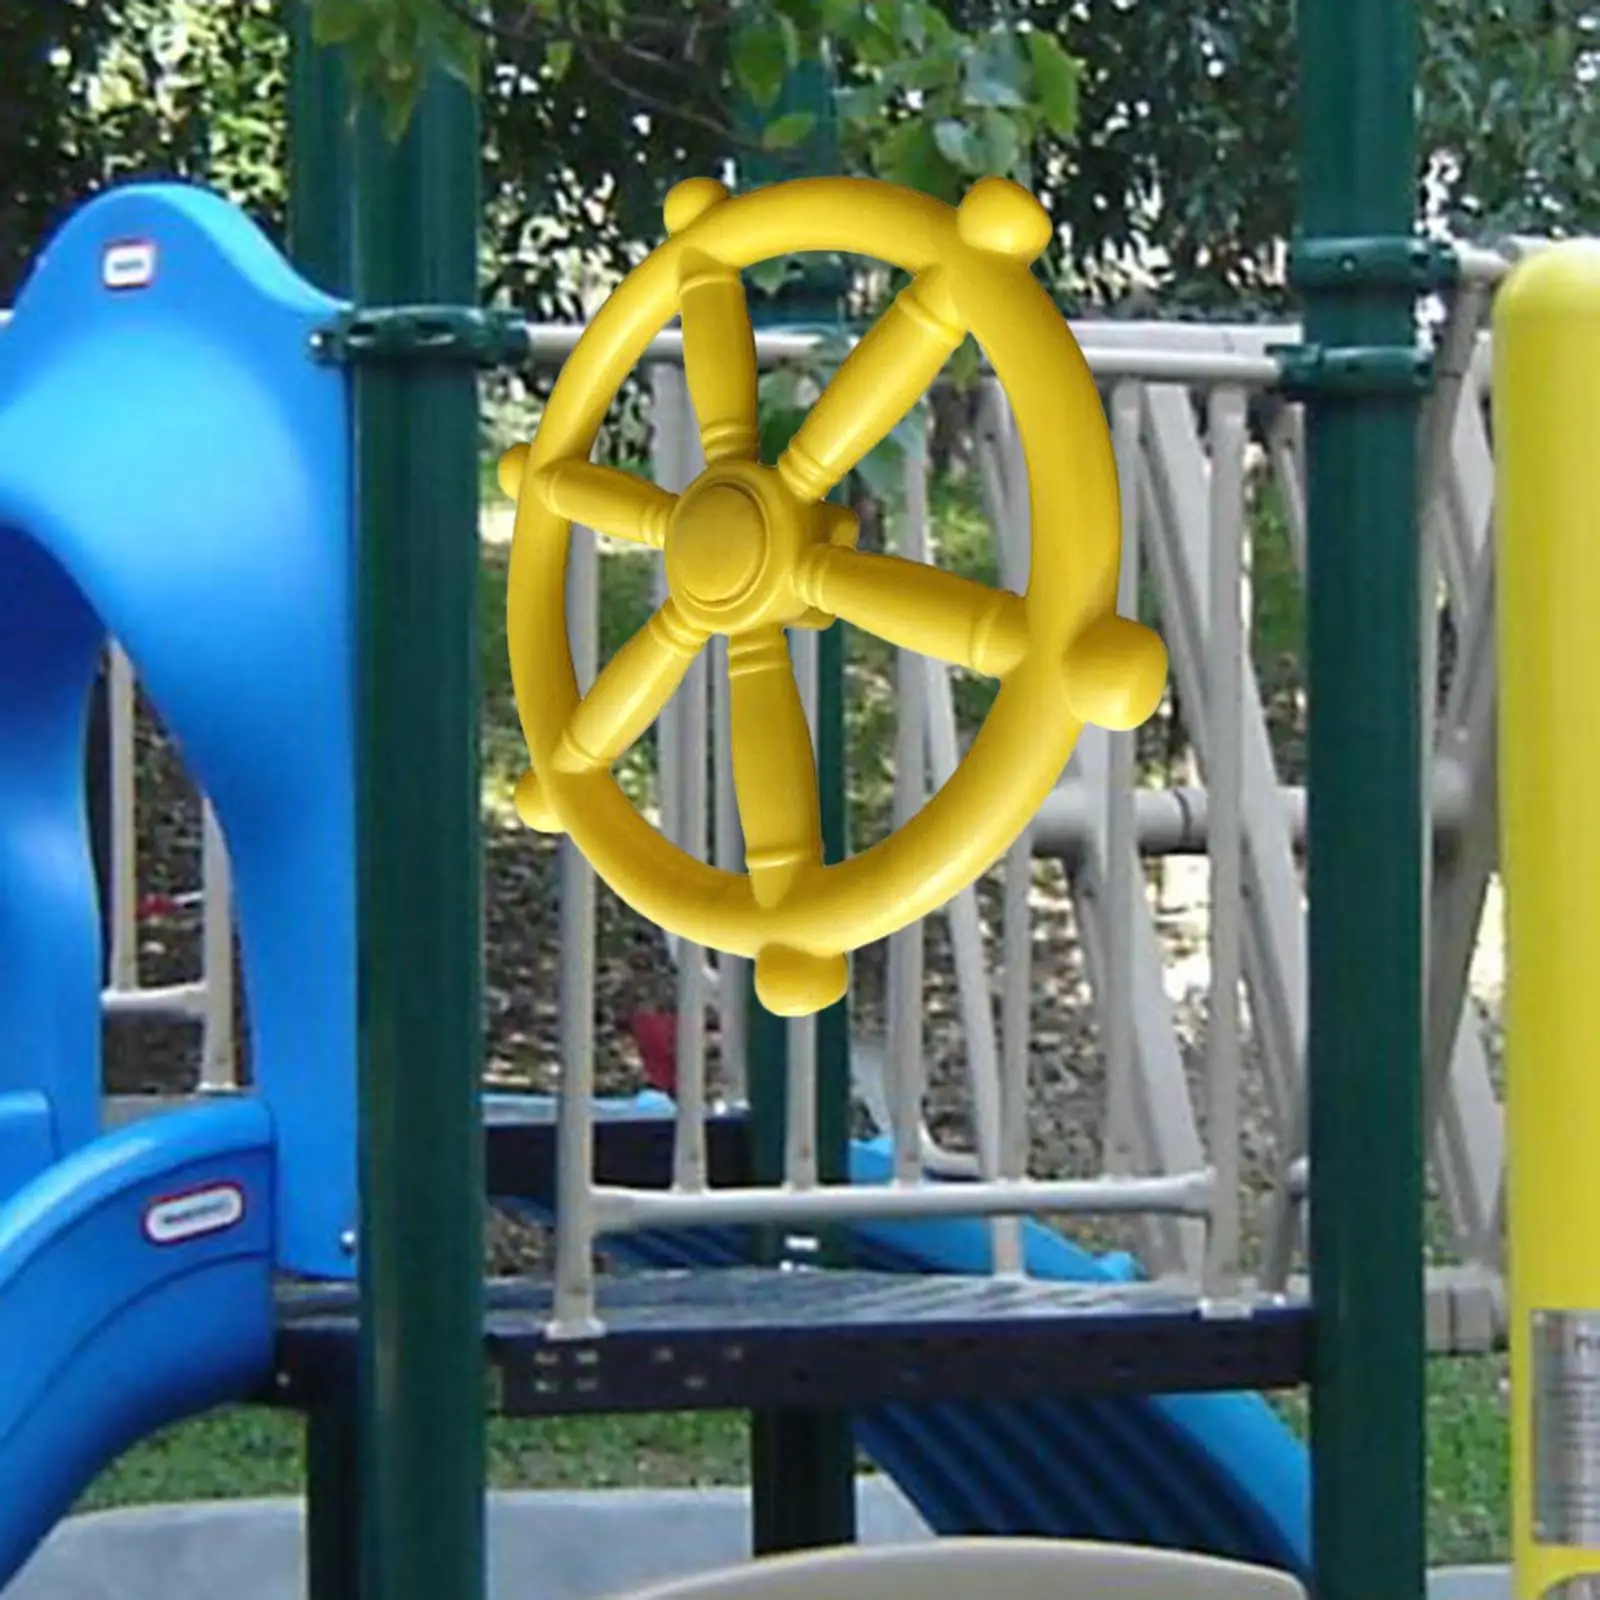 Pirate Ship Wheel with Screws Playground Equipment Kids Steering Wheel Toy Amusement Park Outdoor Treehouse Playhouse Garden